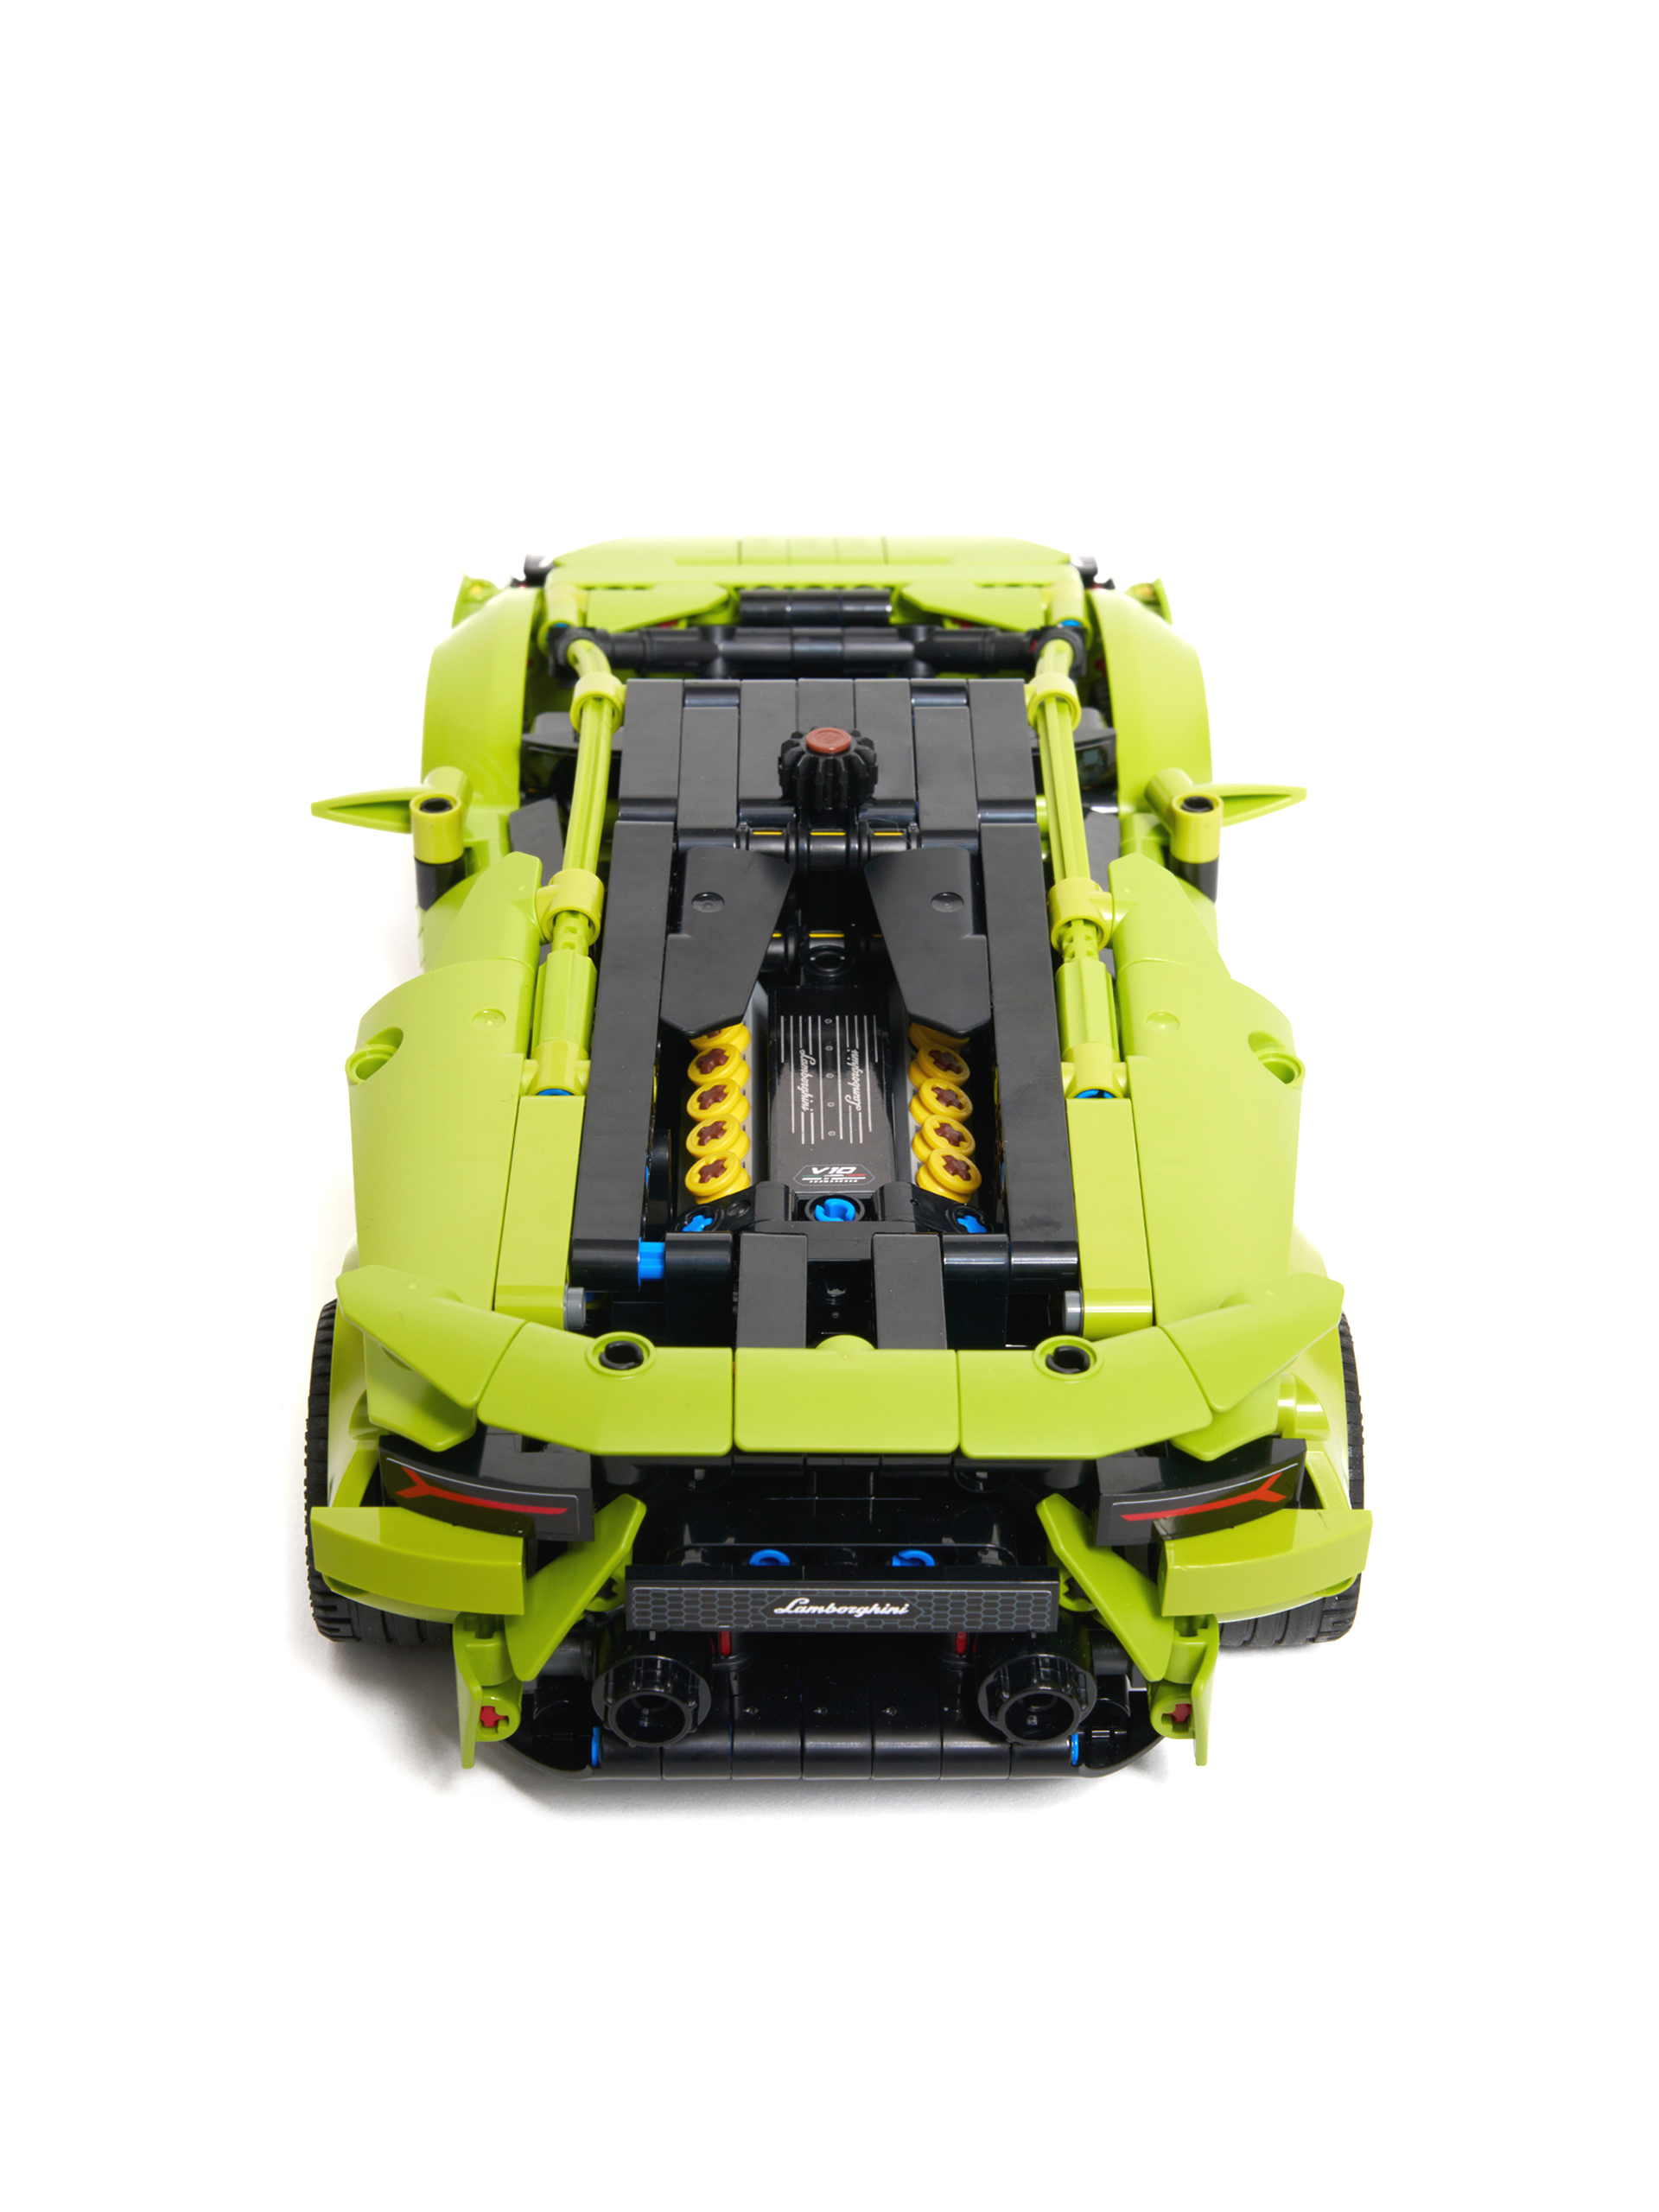 LEGO® Technic™ Lamborghini Huracan Tecnica - 42161